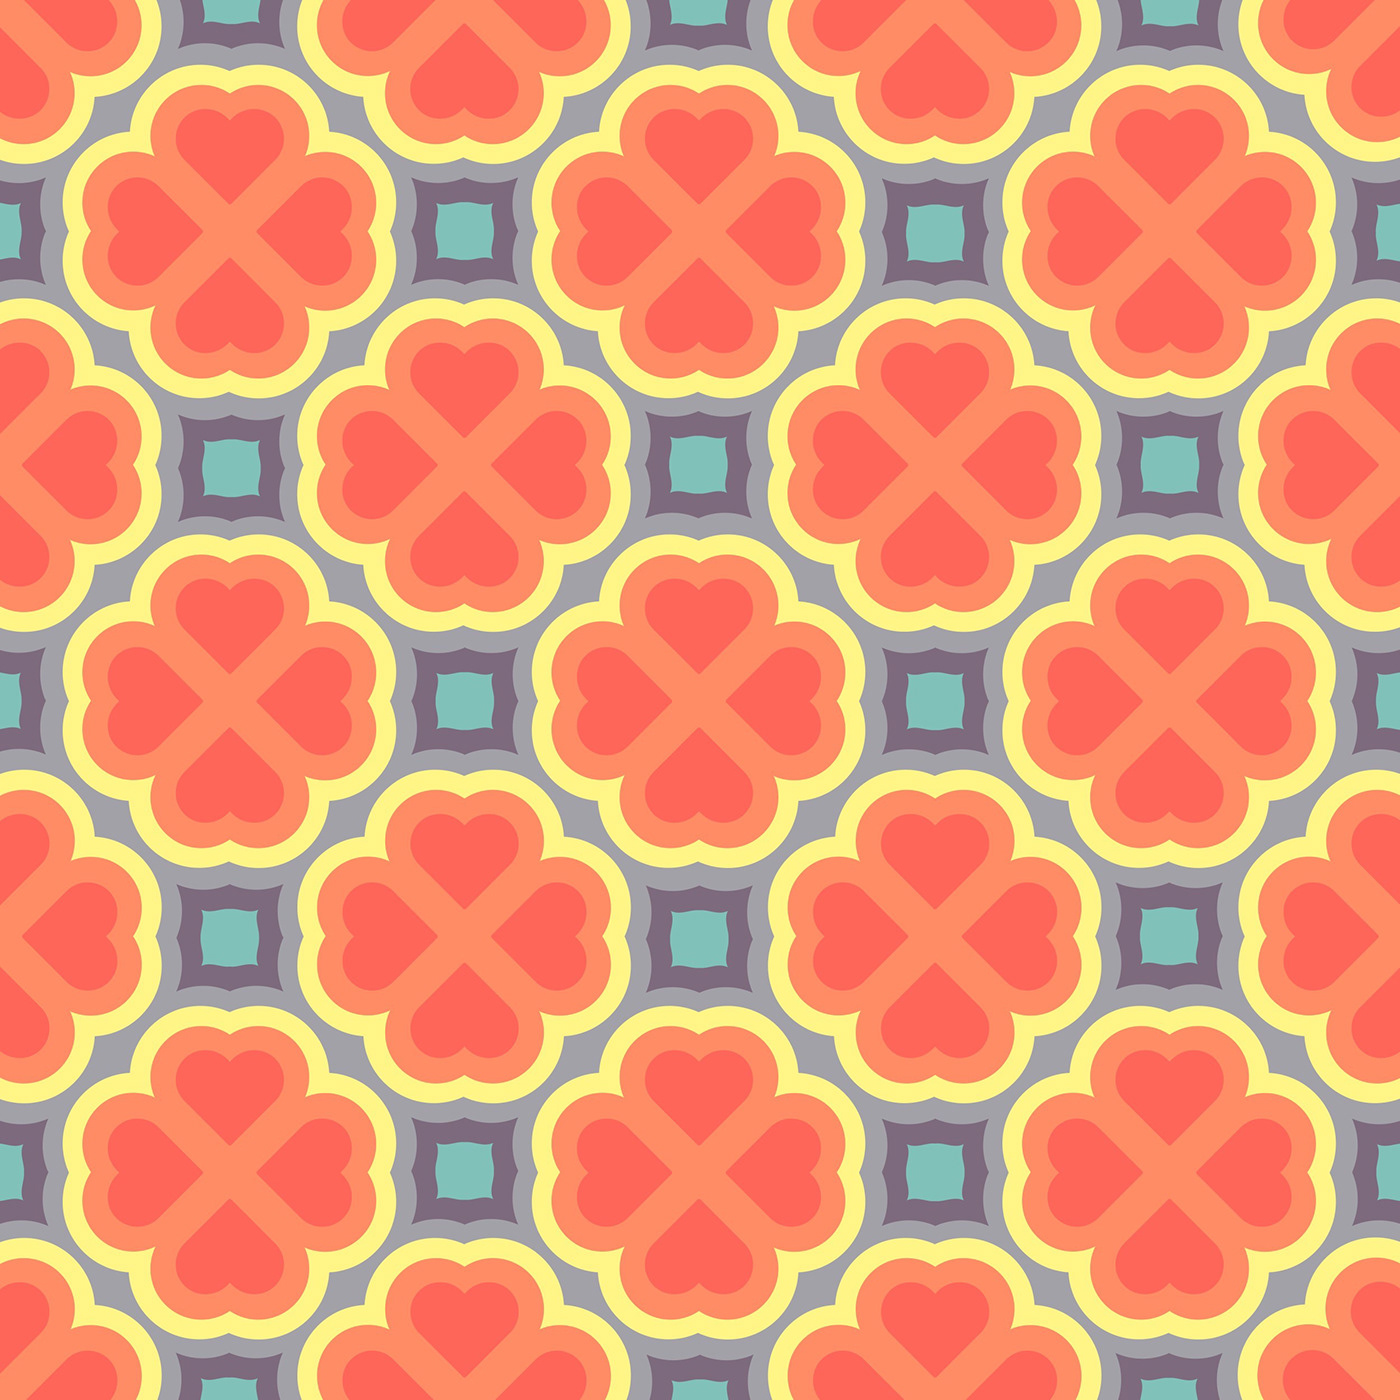 amateur paper crafts pattern design  craft graphic design  paper tile pattern tiles